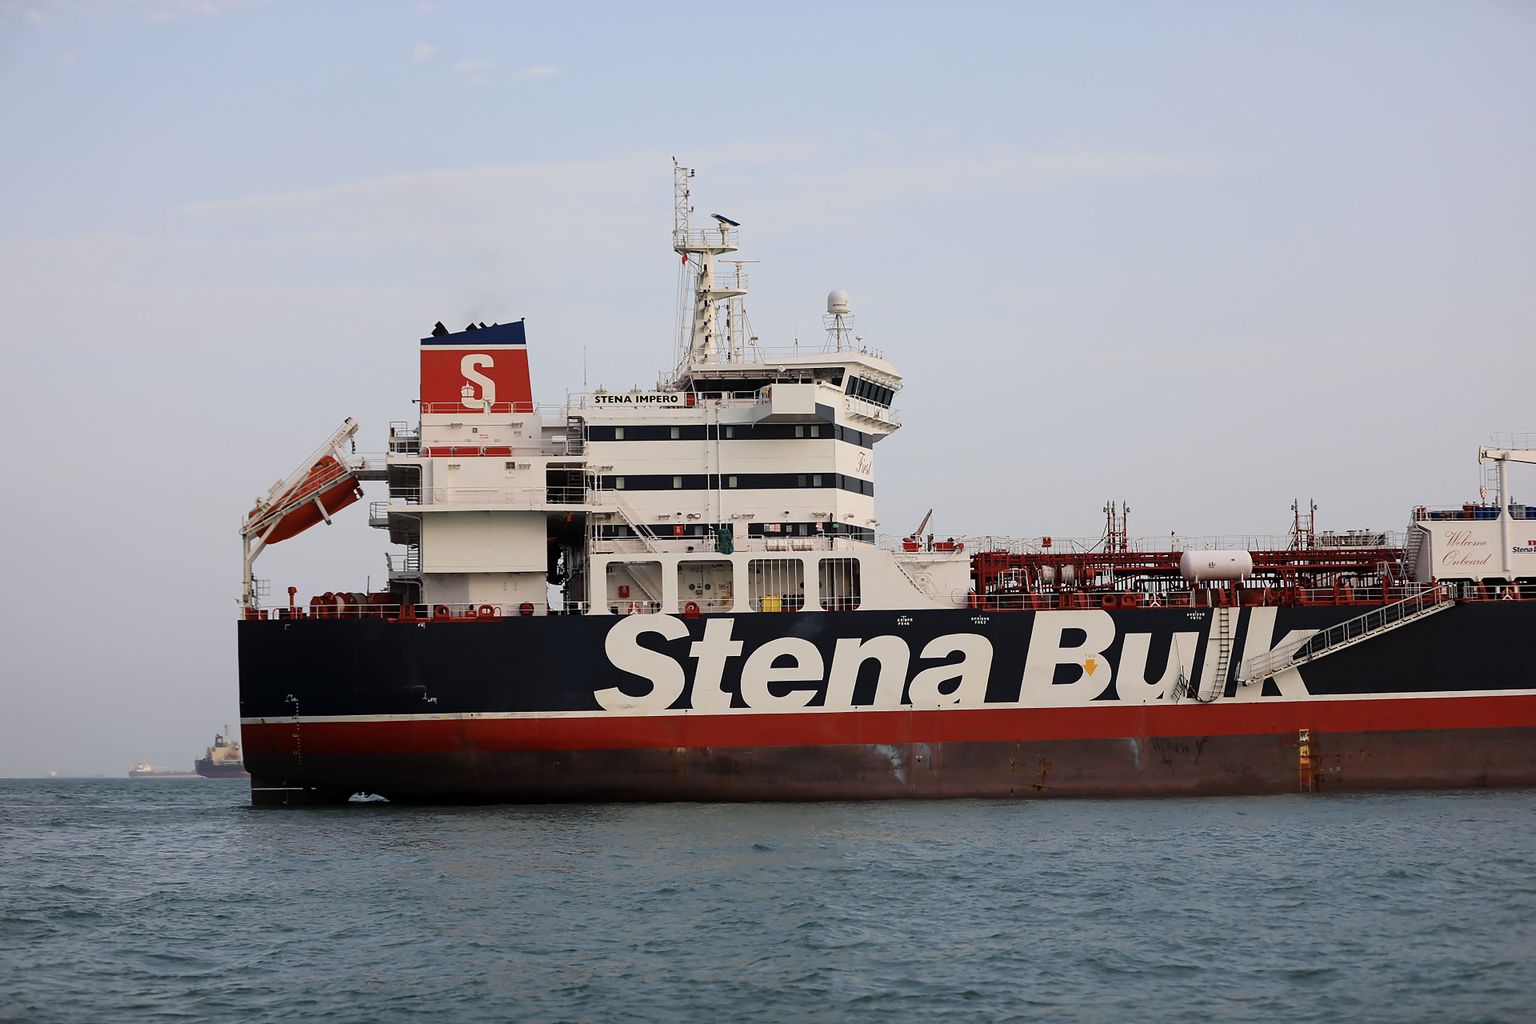 Briti lipu all sõitev hõivatud tanker Stena Impero 21. juulil Iraani Bandar Abbasi sadamas.